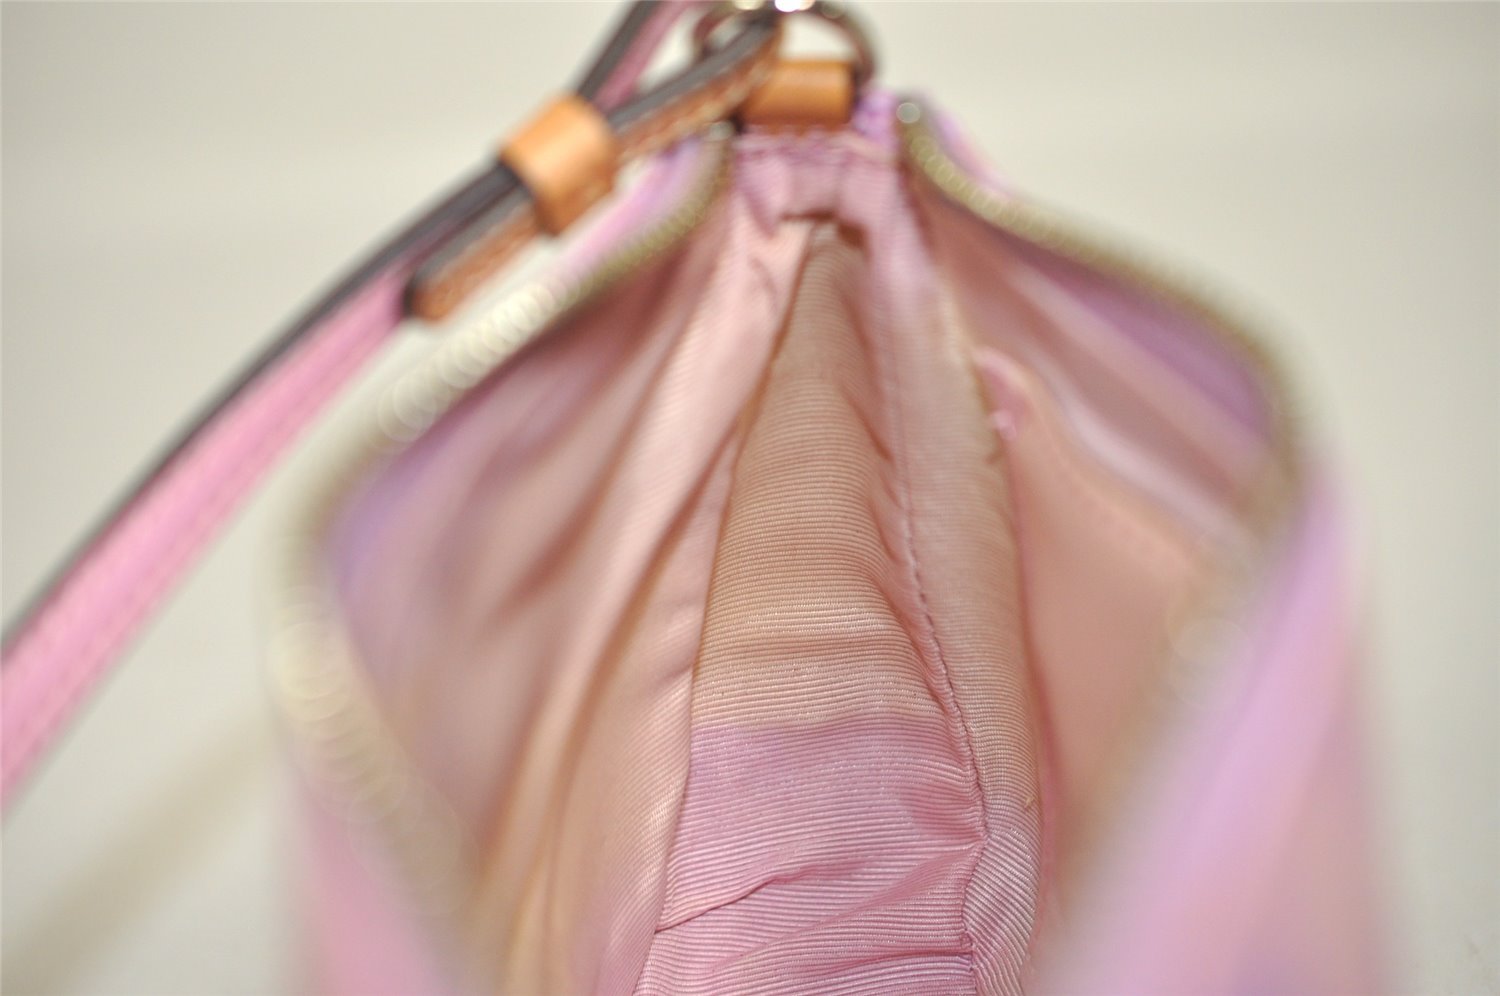 Authentic COACH Signature Hand Bag Pouch Purse Canvas Leather 6094 Pink 4063I